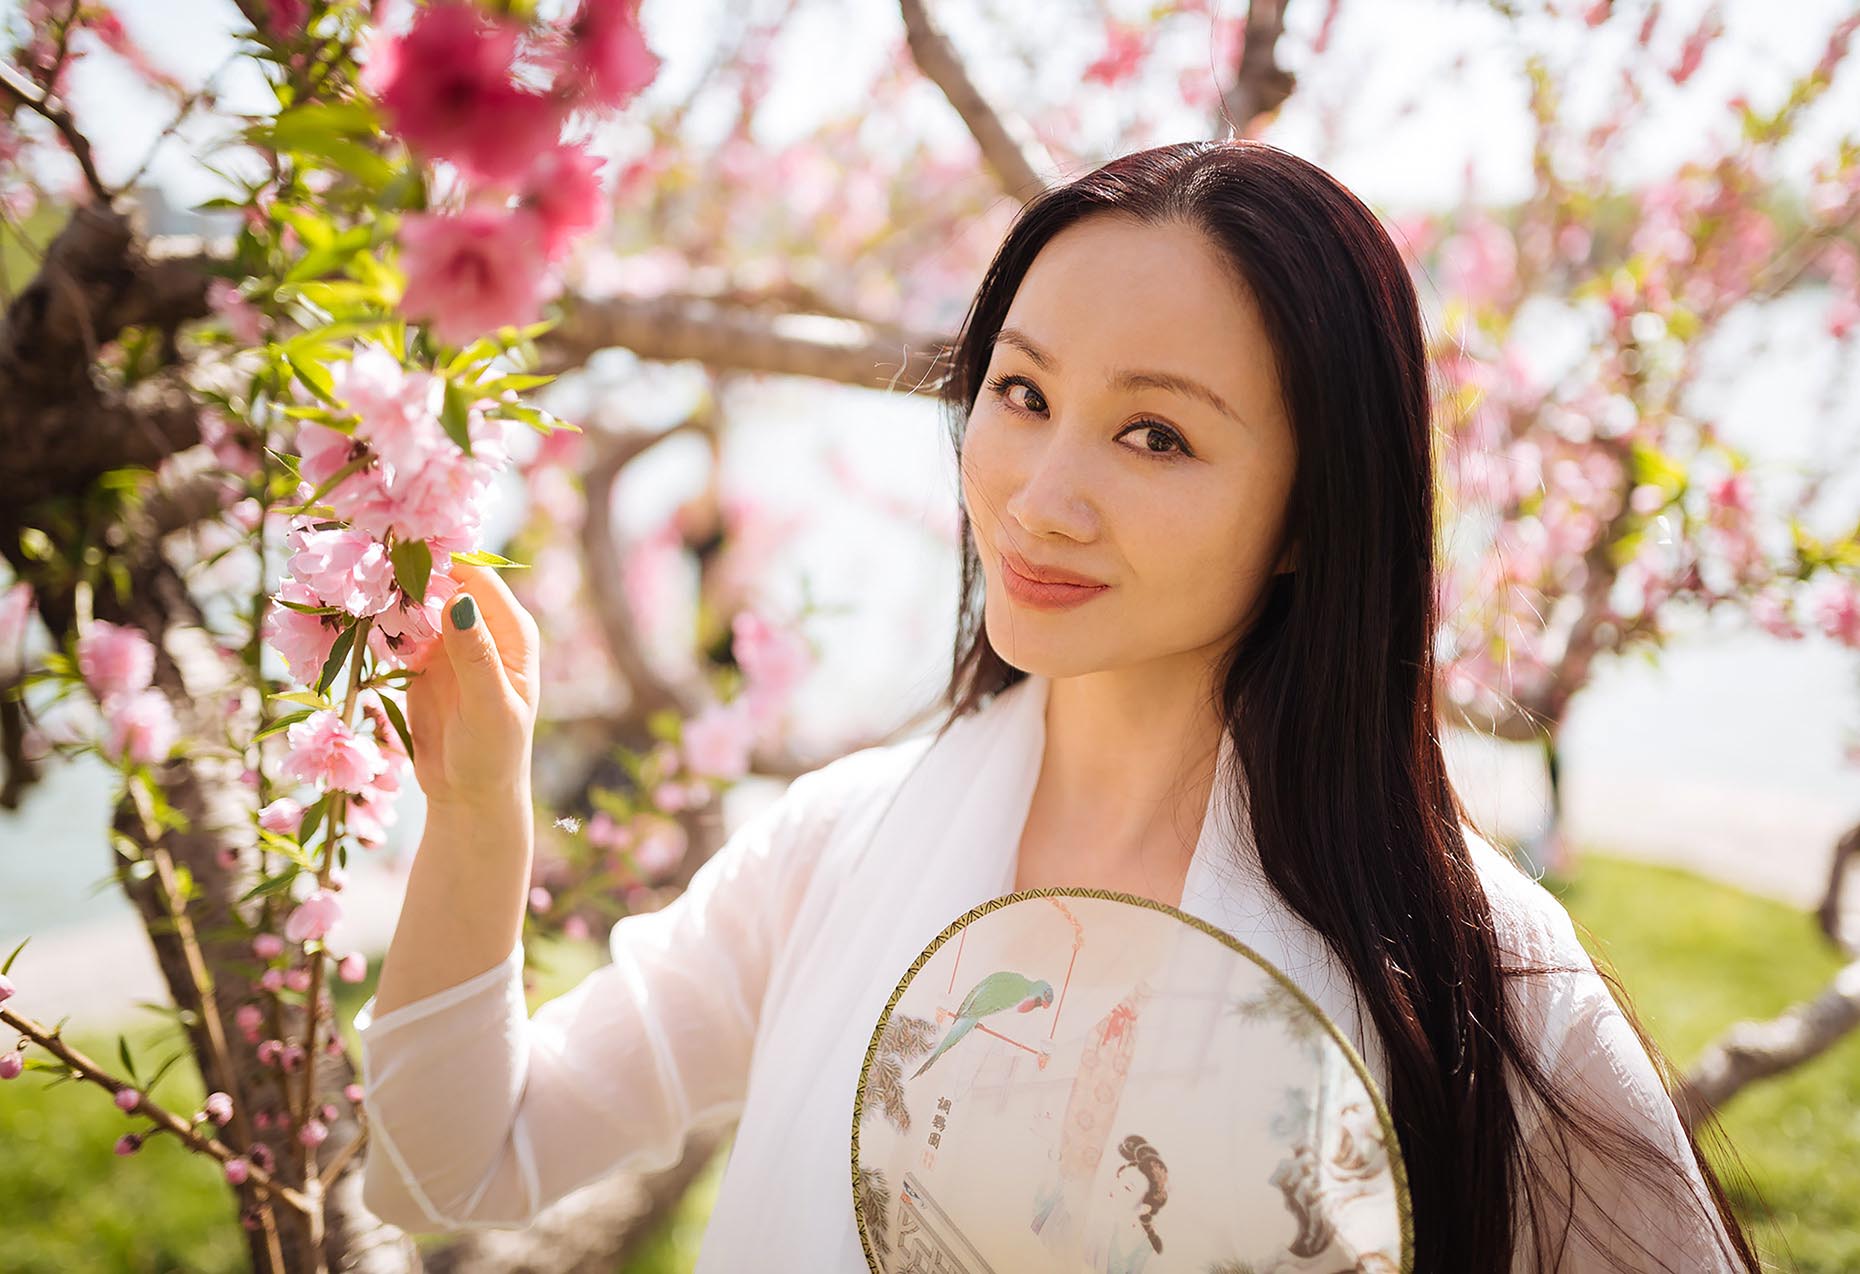 travel-photography-woman-portrait-beijing-china-cherry-blossom-21